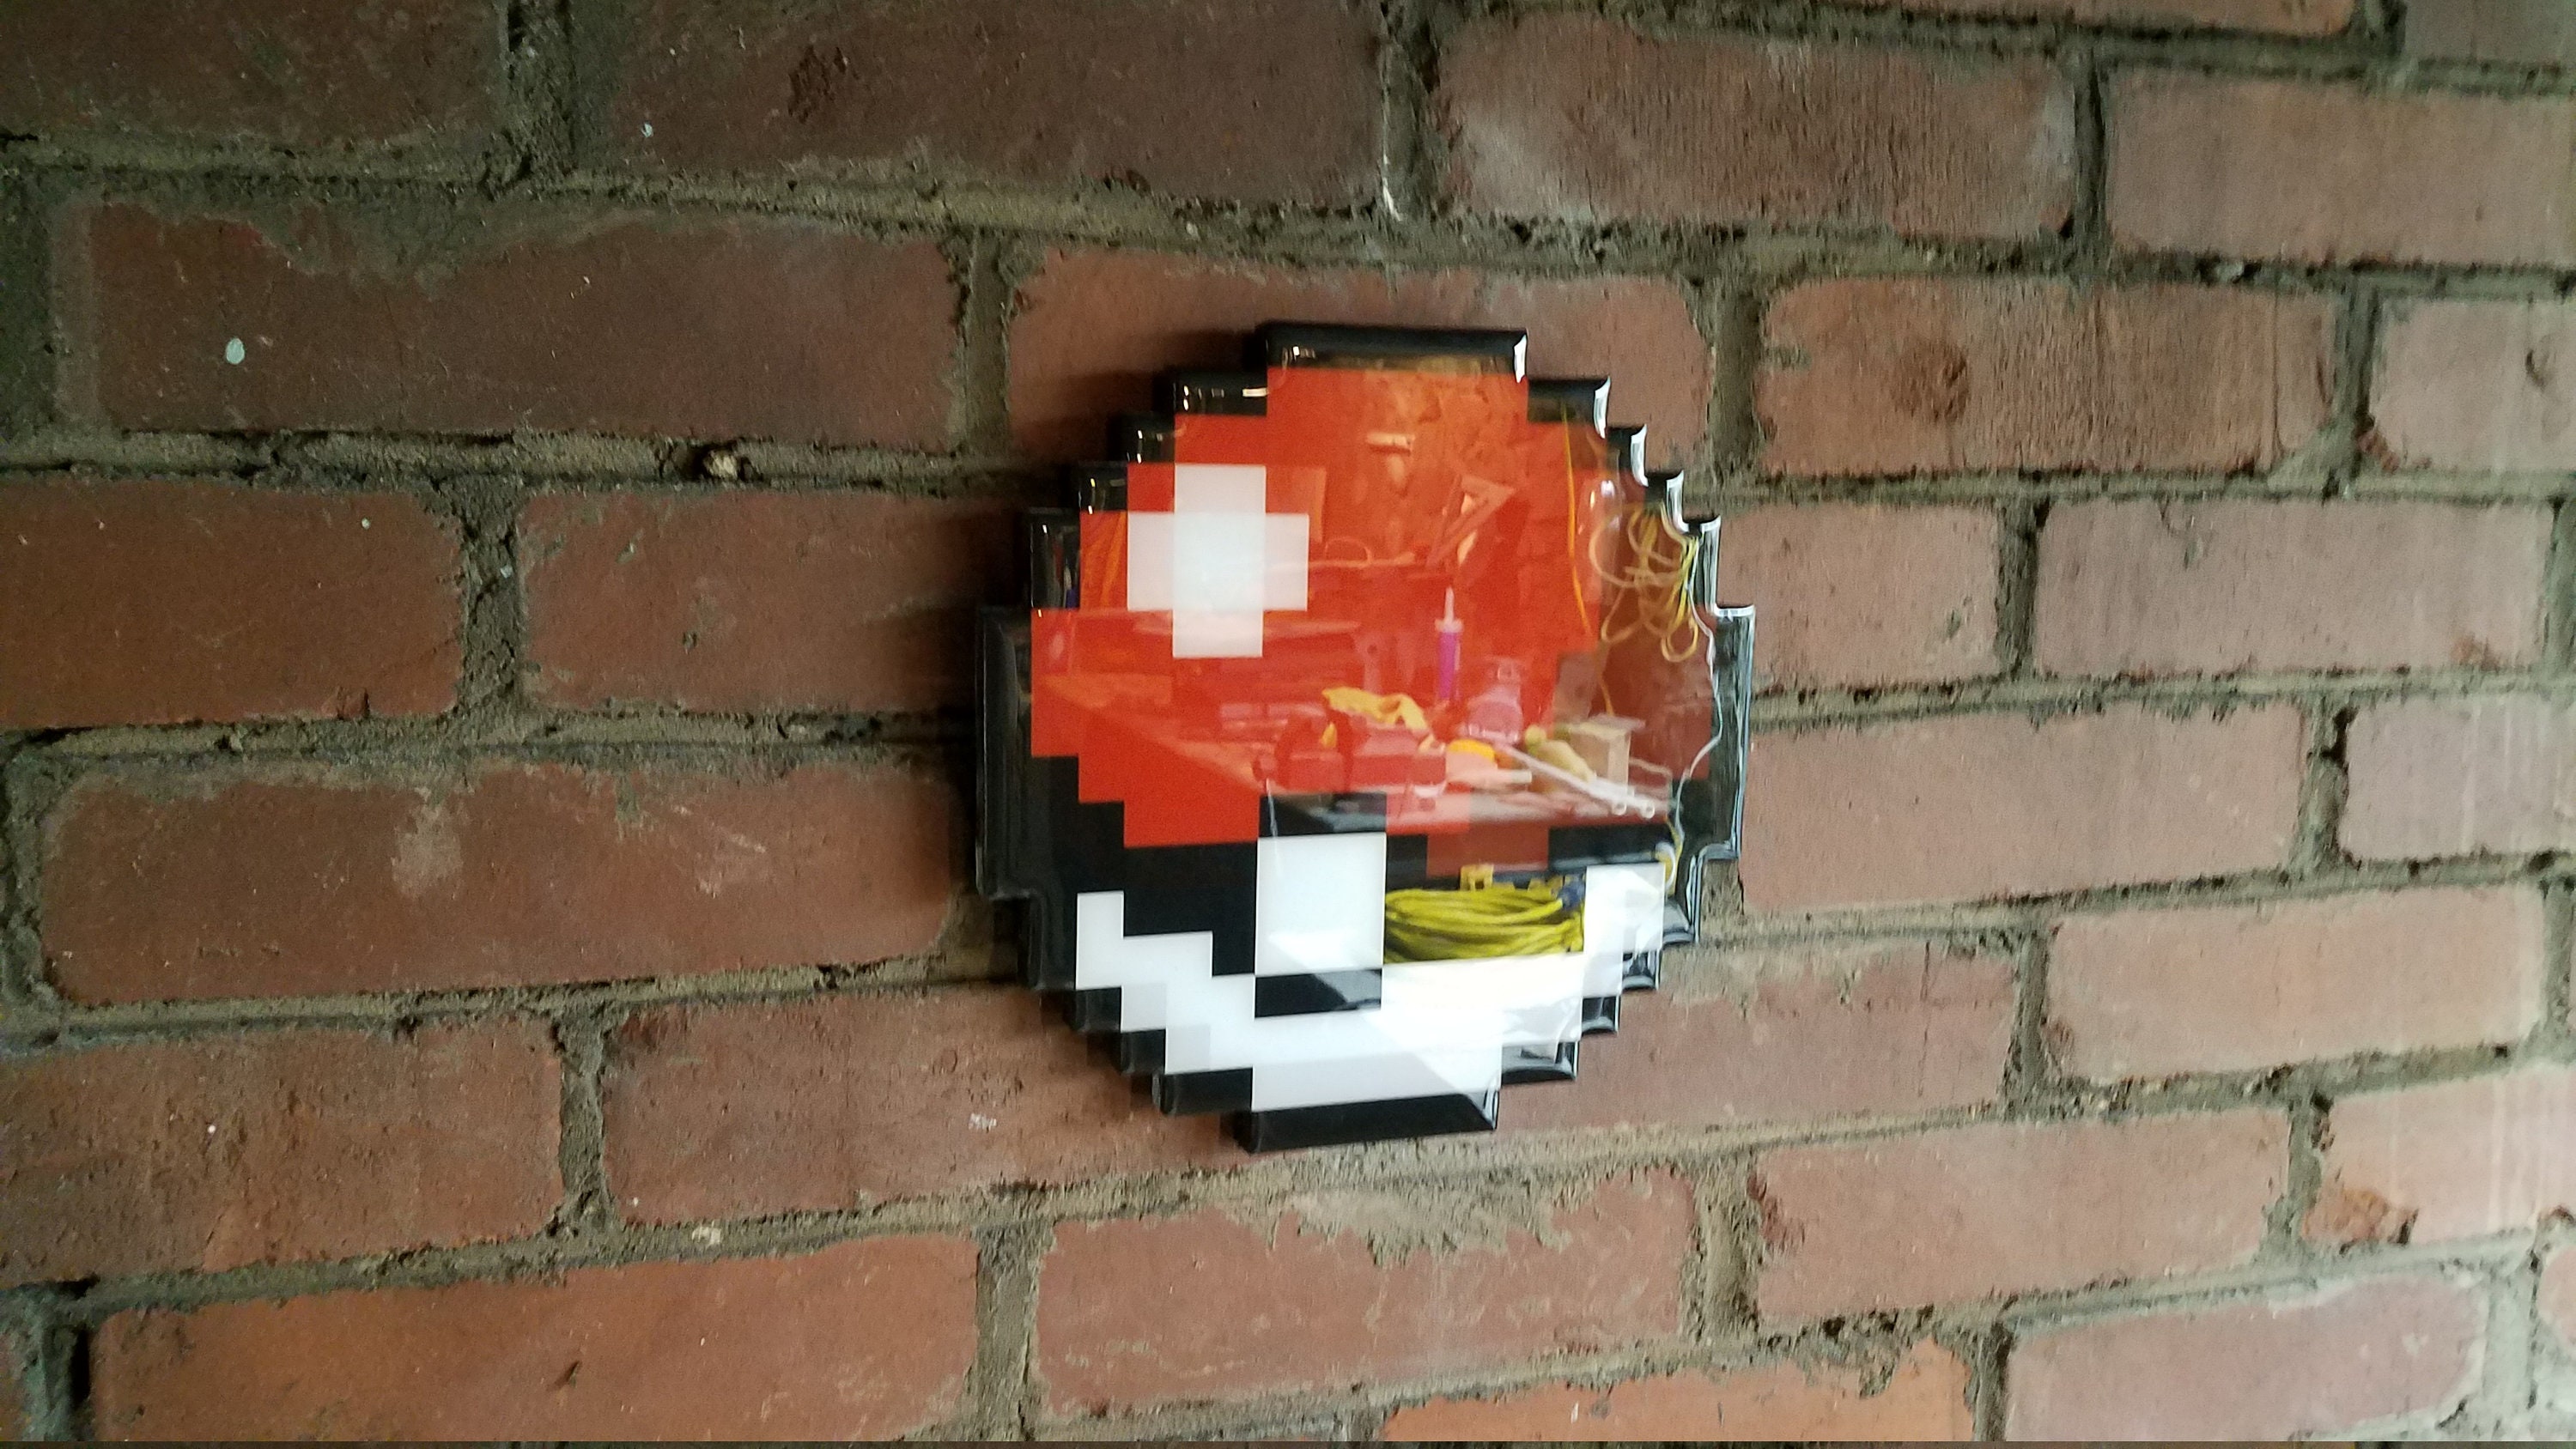 Great Ball Pixel Art – BRIK